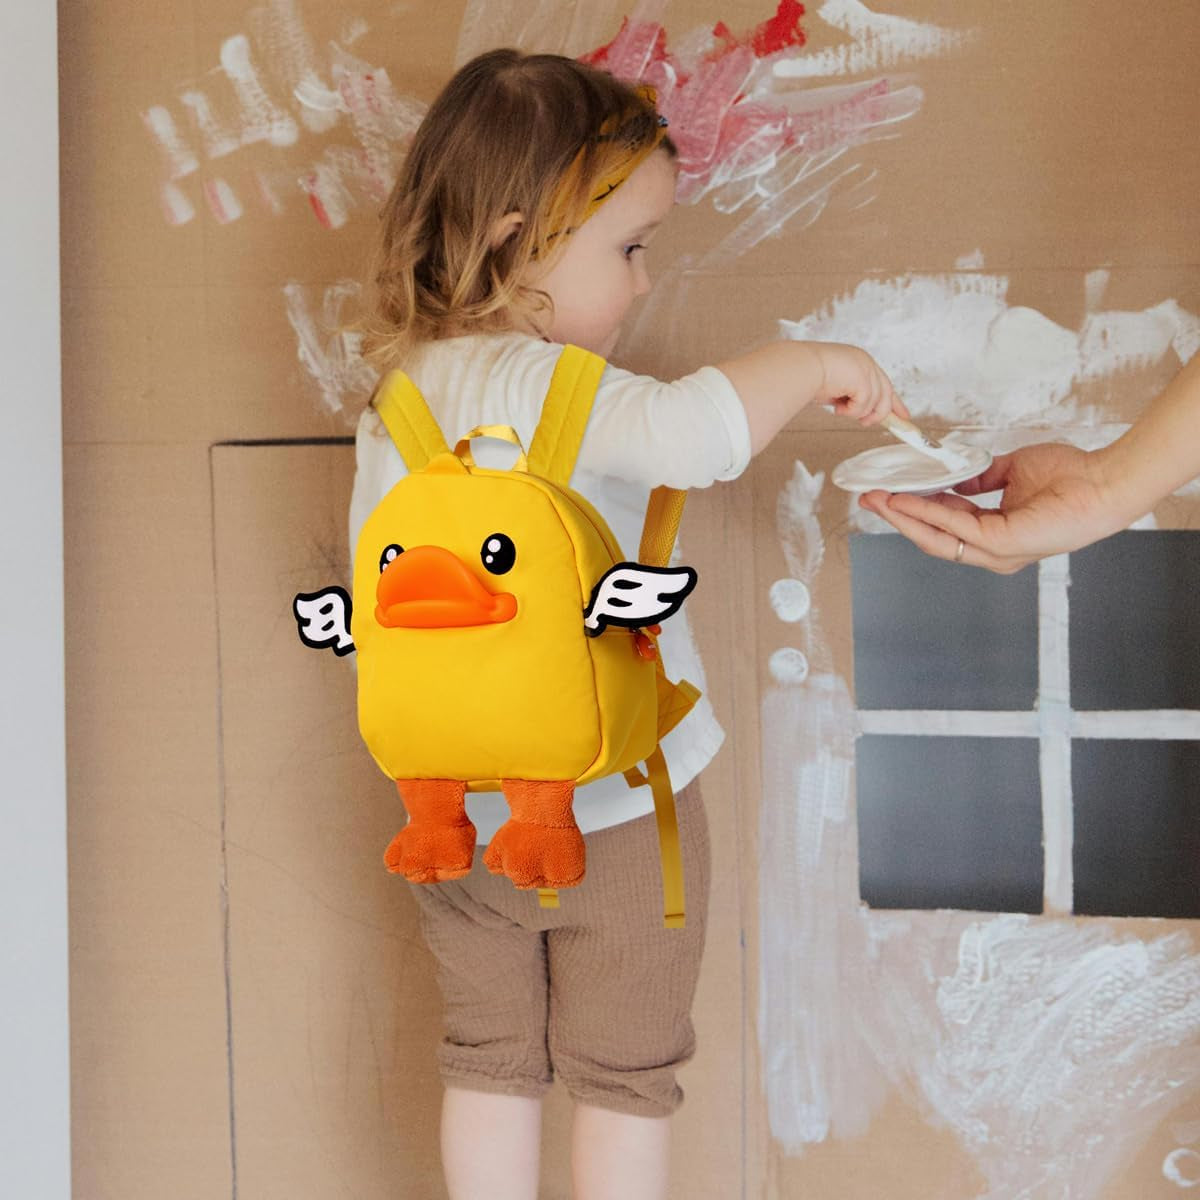 B.Duck Kids Backpack,Girls 3D Cartoon Book Bag Cute Travel Casual Yellow Schoolbag Kindergarten